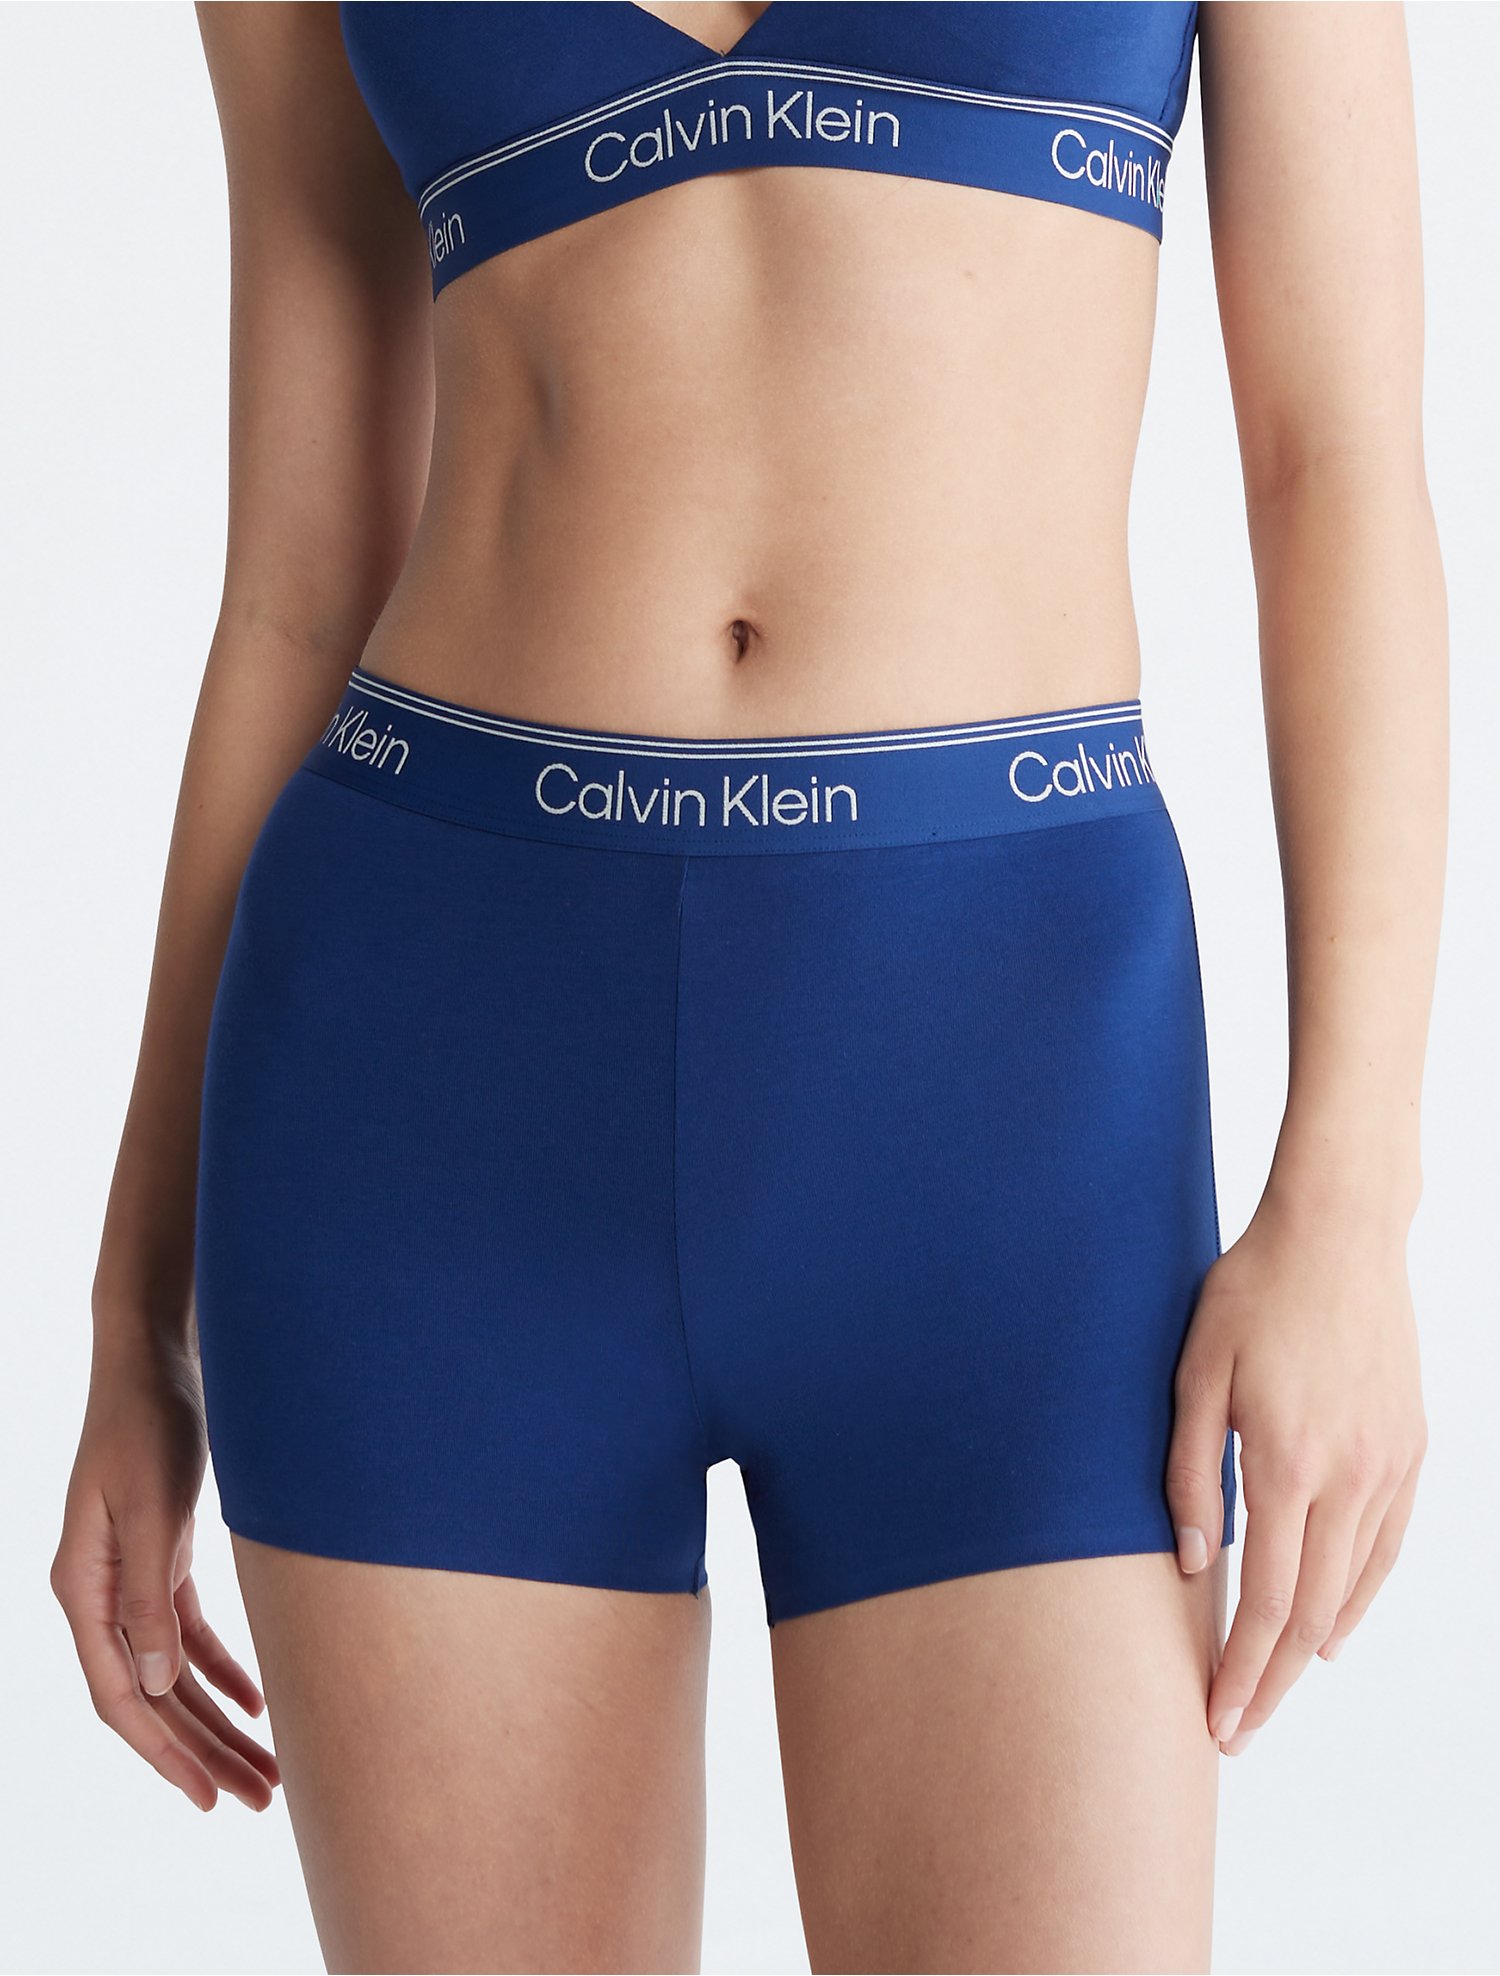 Beperken boot Zwembad Calvin Klein Athletic Boyshorts | Calvin Klein